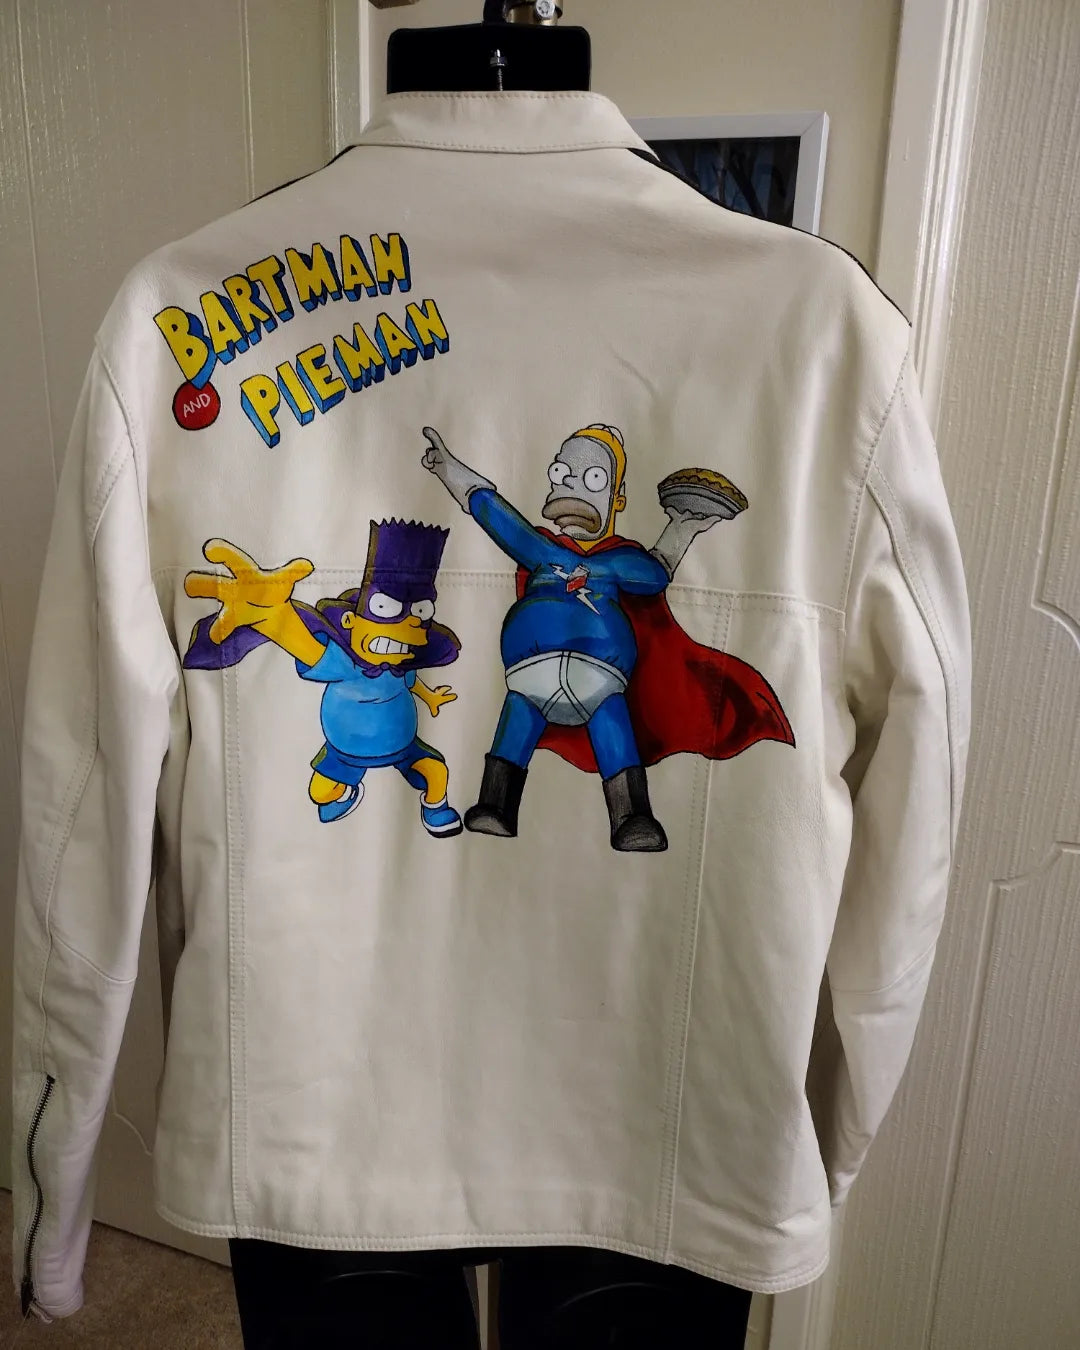 Street Legal - El Barto Bartman and Pieman The Simpsons Jacket